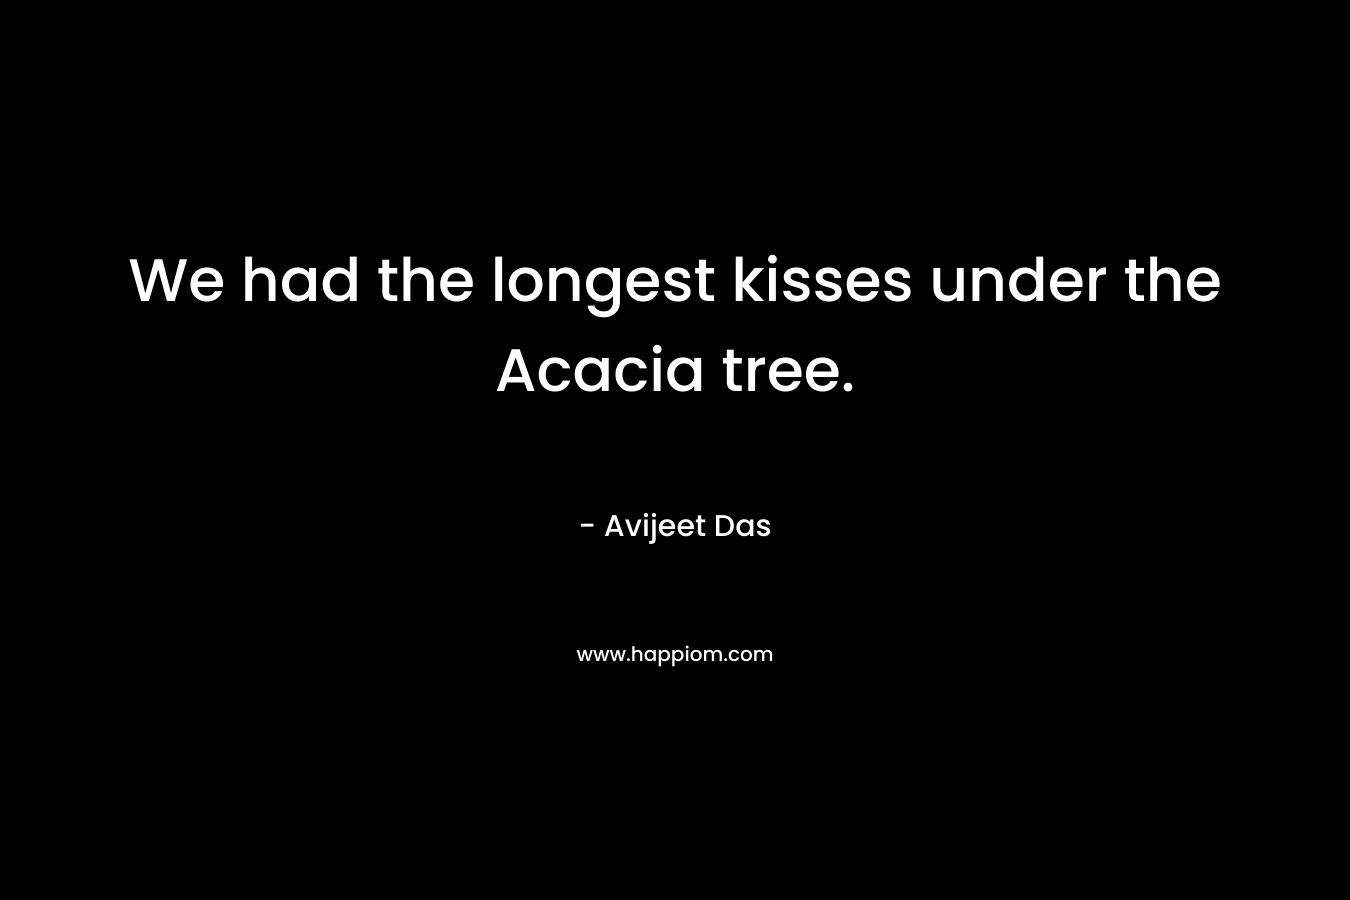 We had the longest kisses under the Acacia tree.